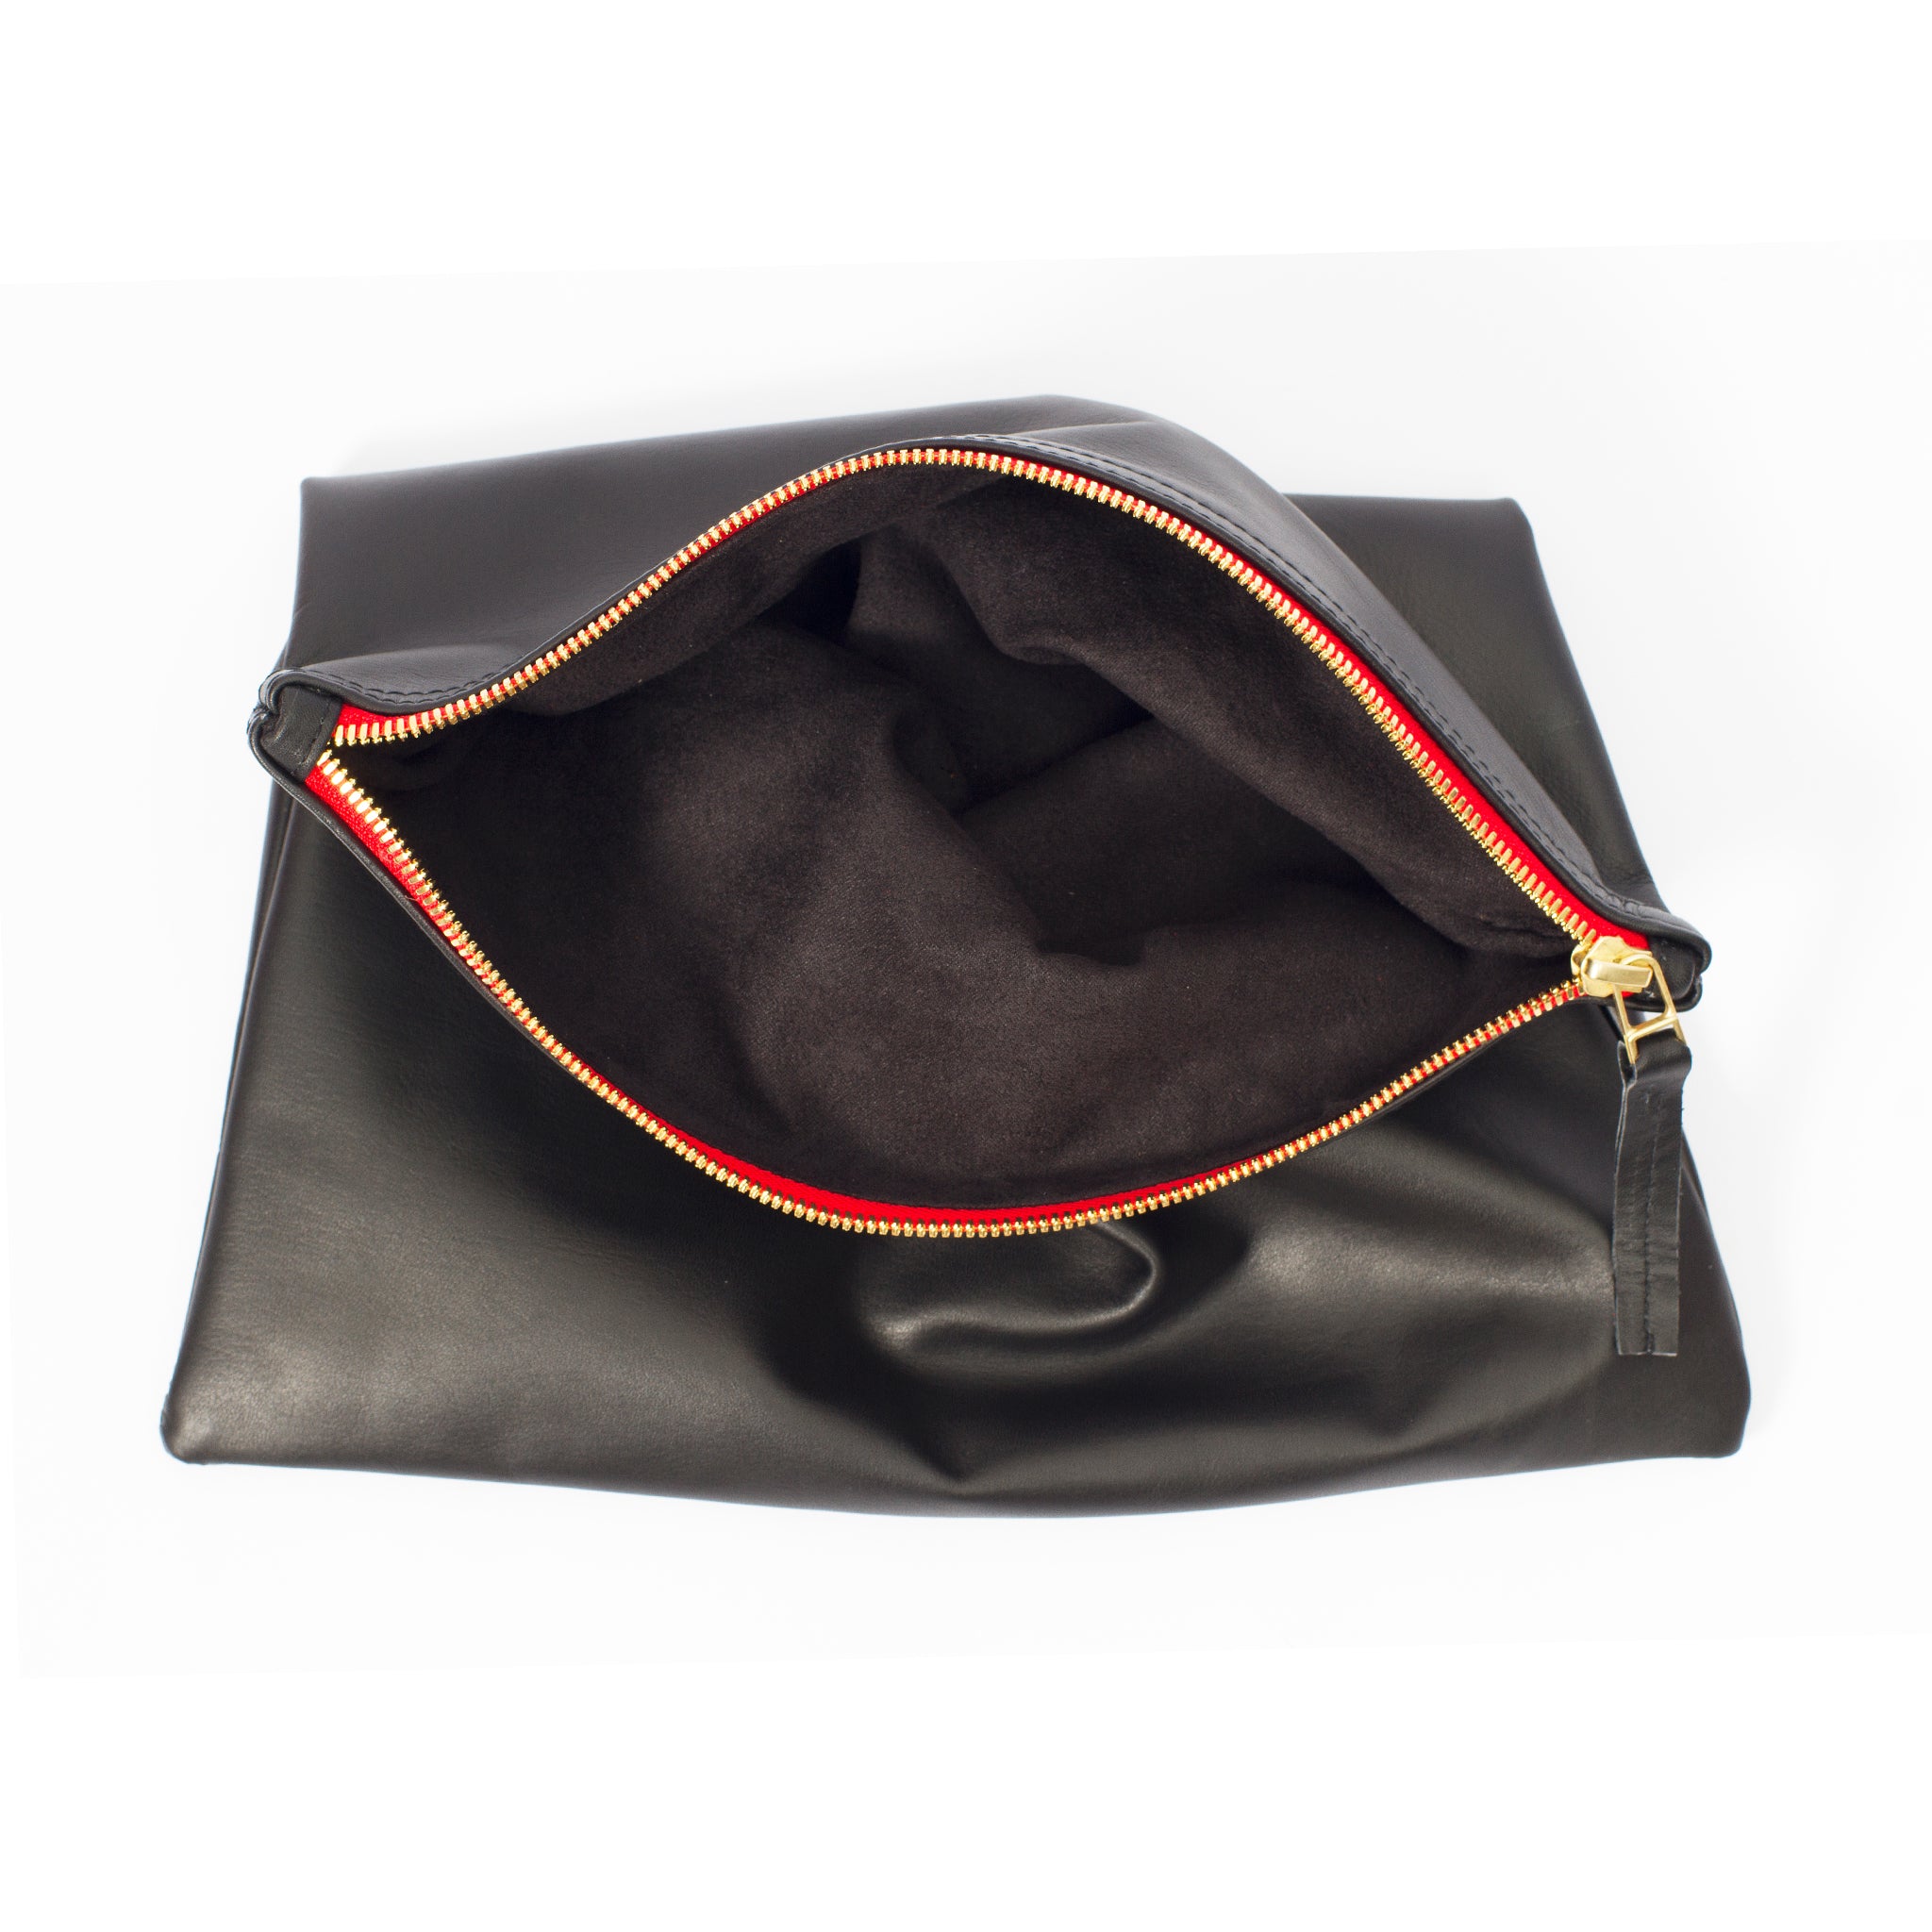 Inside view black genuine leather foldover clutch